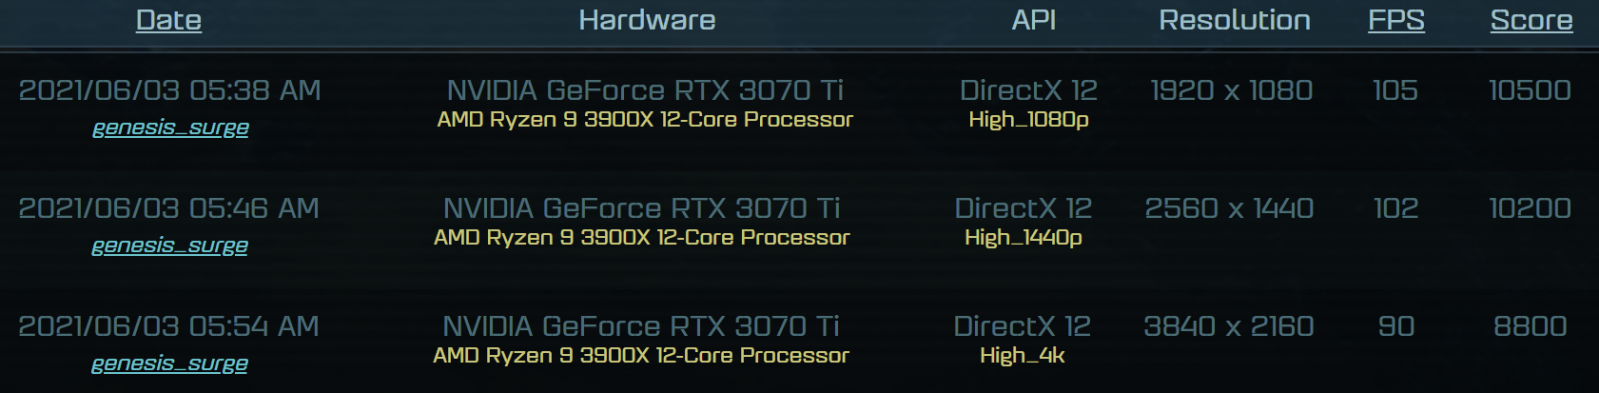 NVIDIA-GeForce-RTX-3070-Ti-AOTS.png